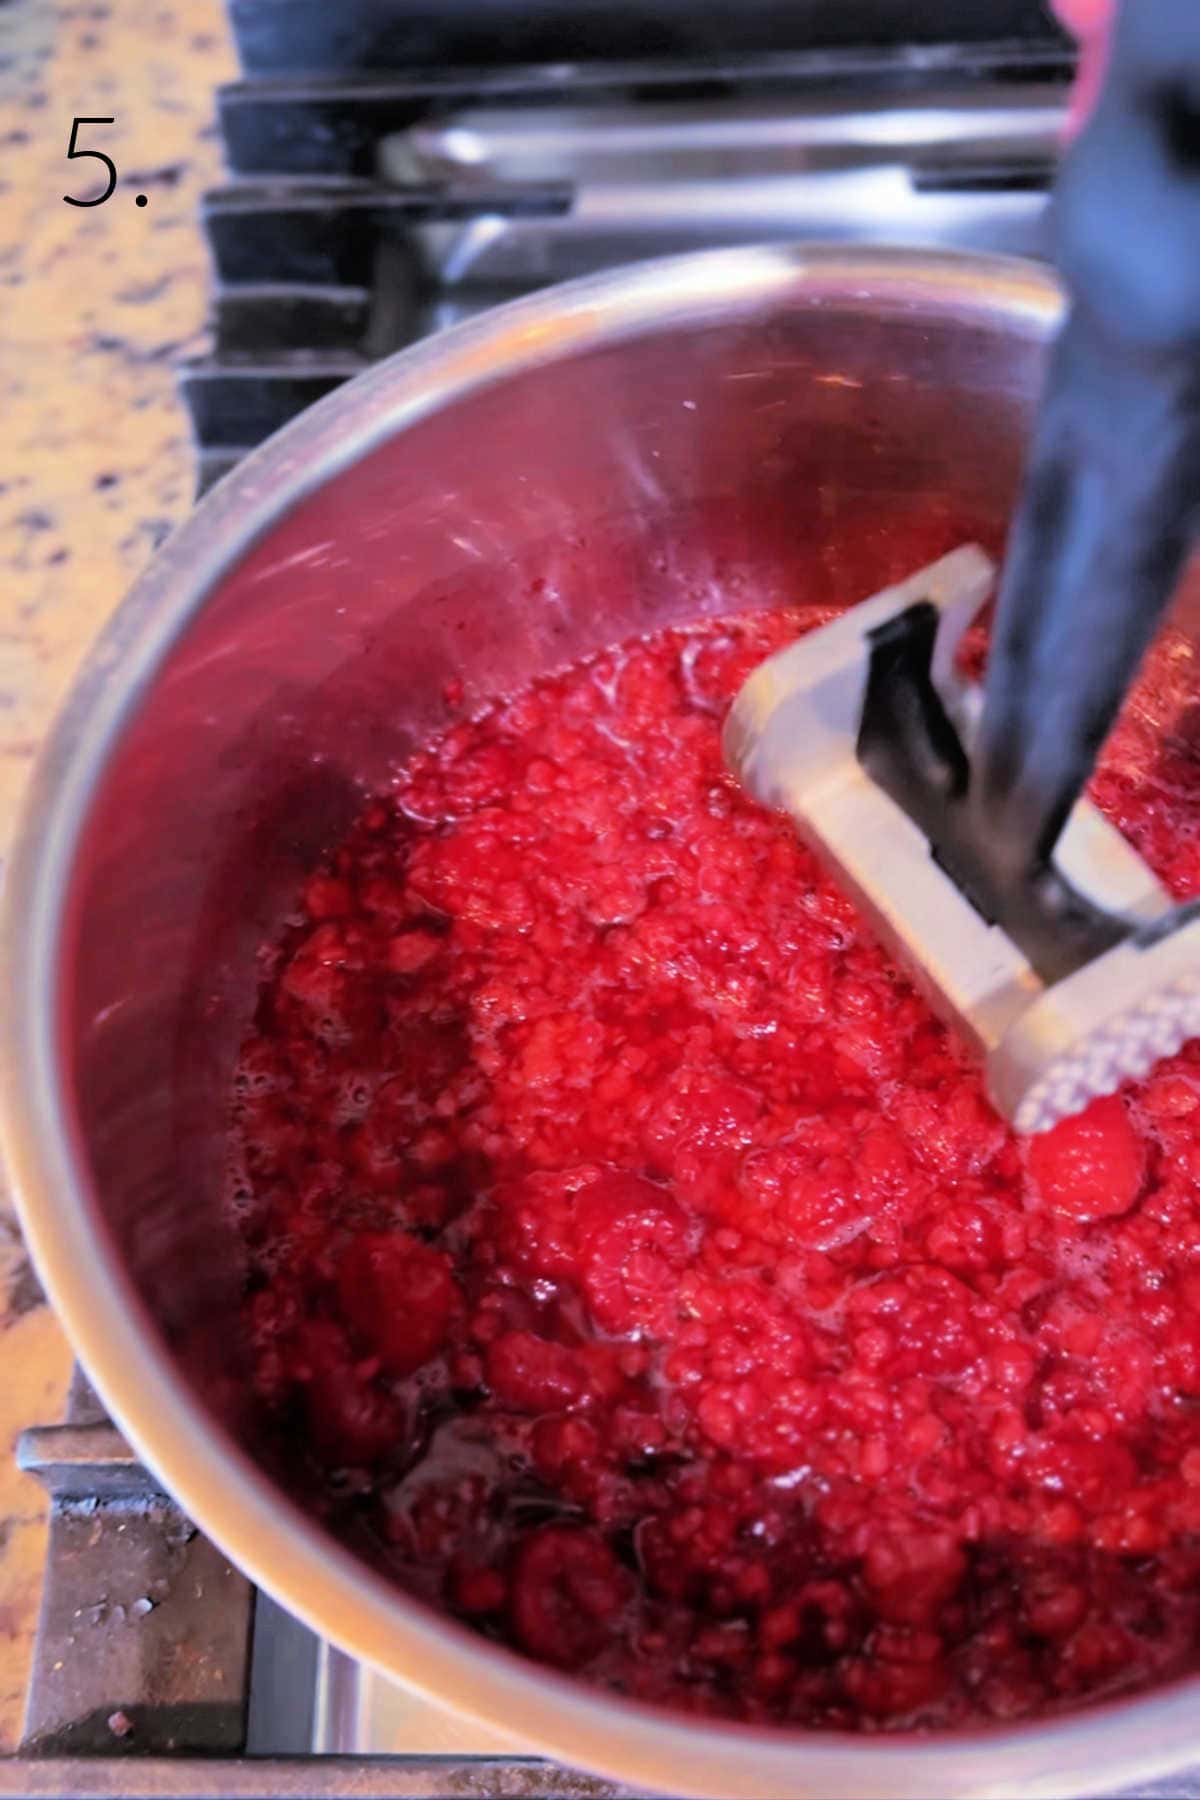 Mashing raspberries in a saucepan for raspberry sauce.